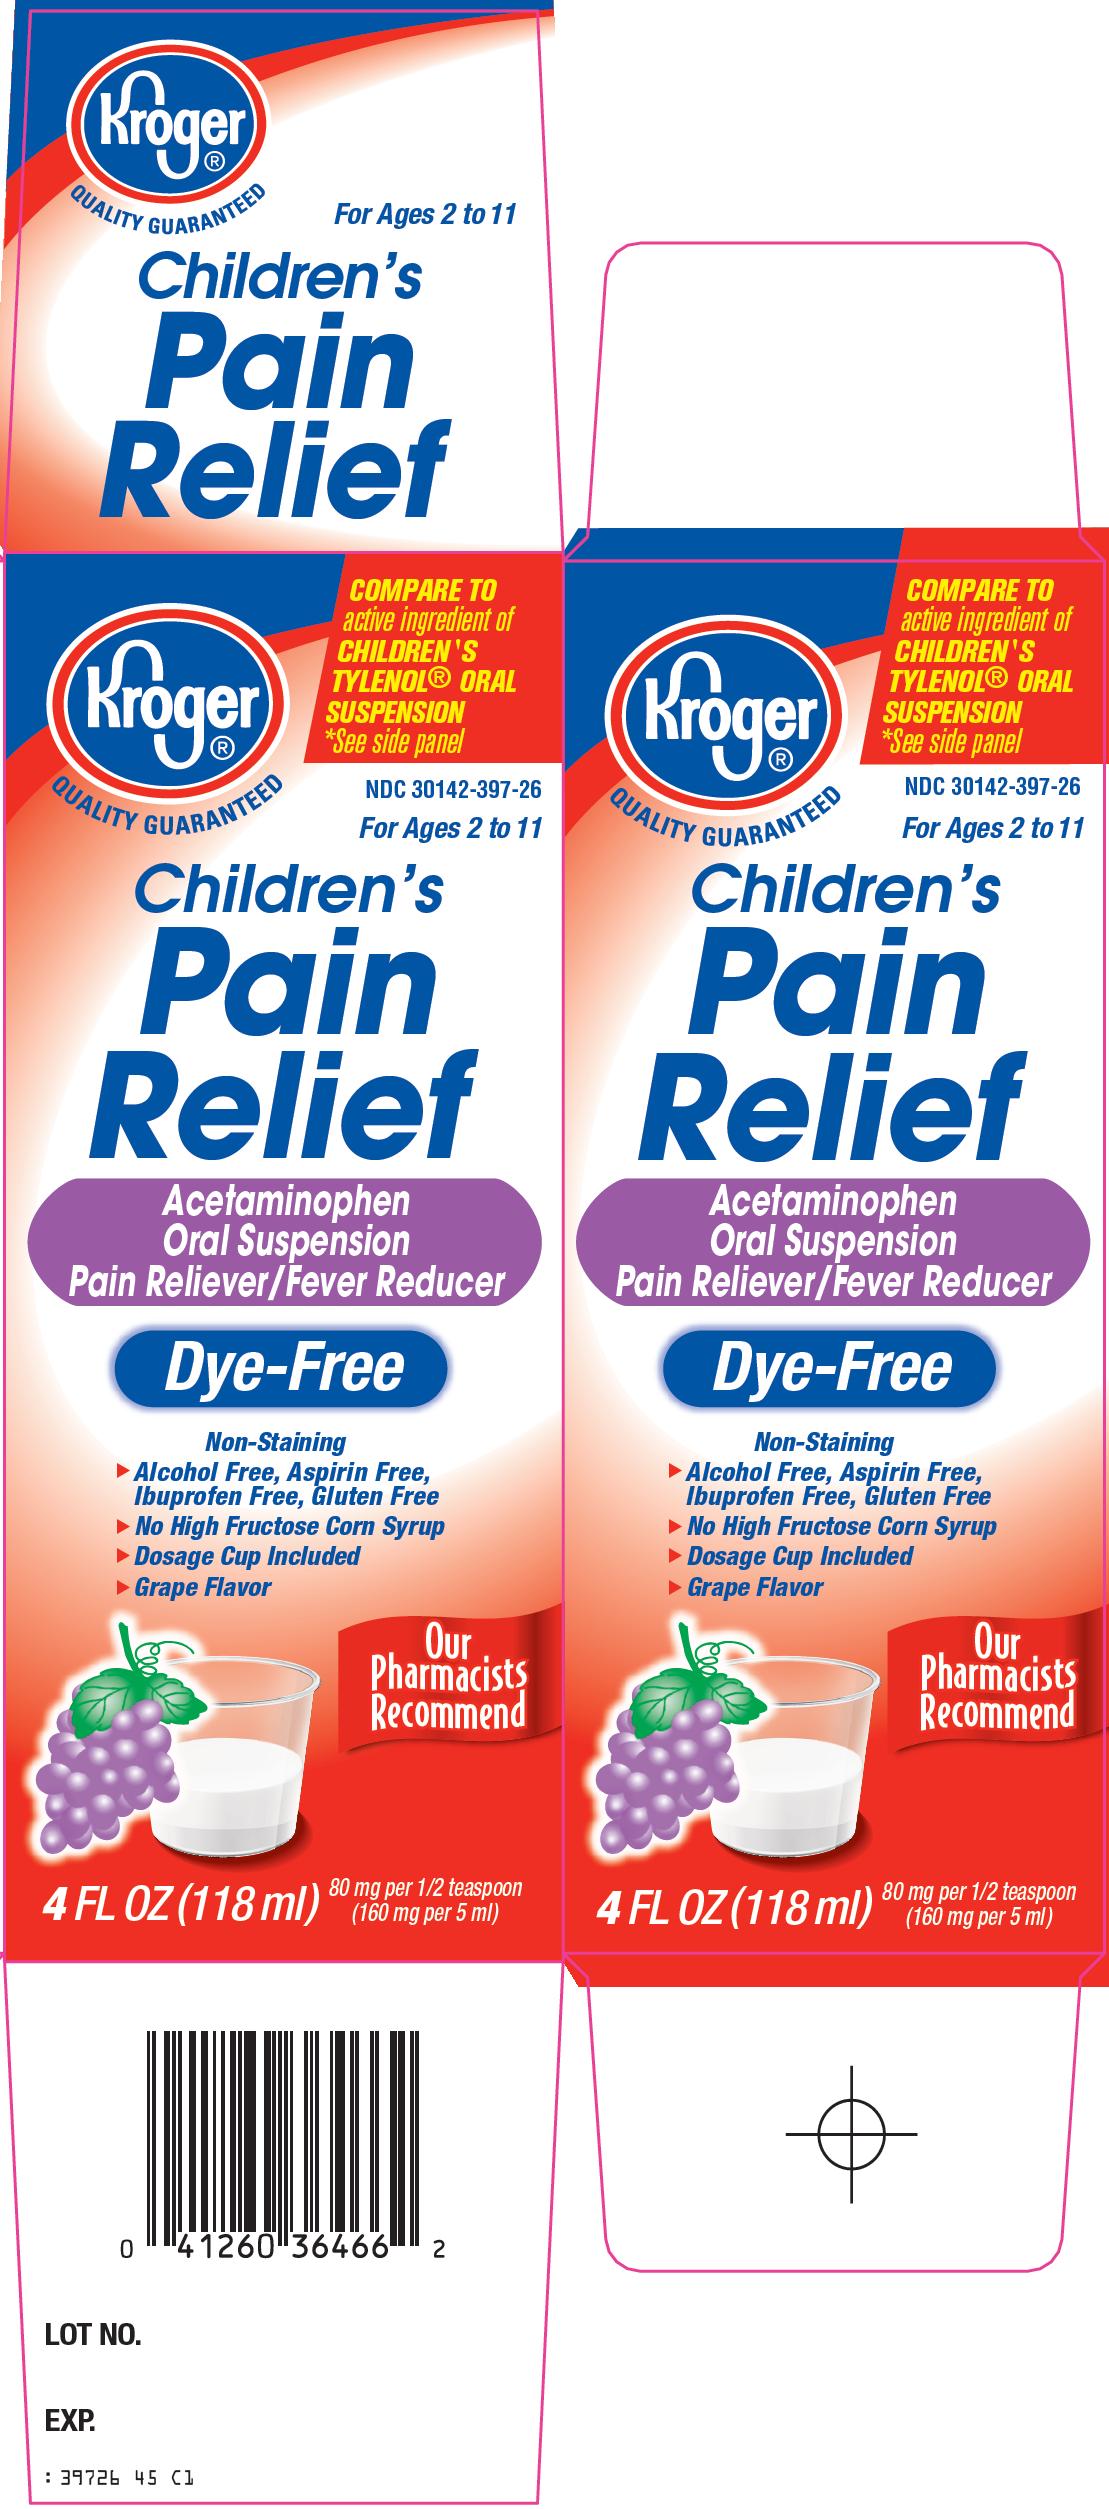 Children's Pain Relief Carton Image 1